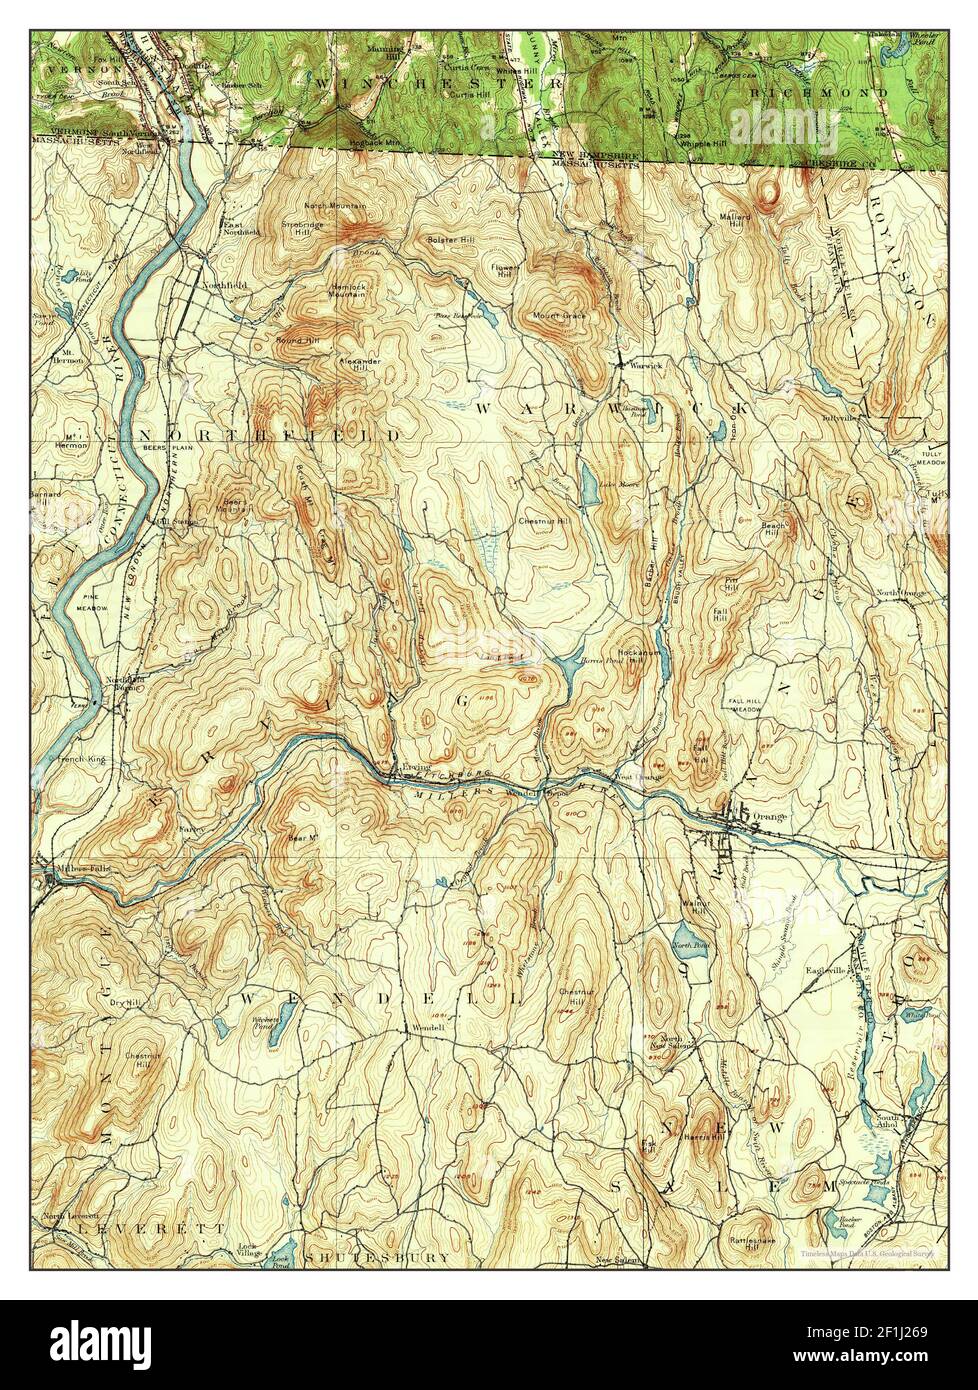 Warwick, Massachusetts, map 1935, 1:62500, United States of America by Timeless Maps, data U.S. Geological Survey Stock Photo